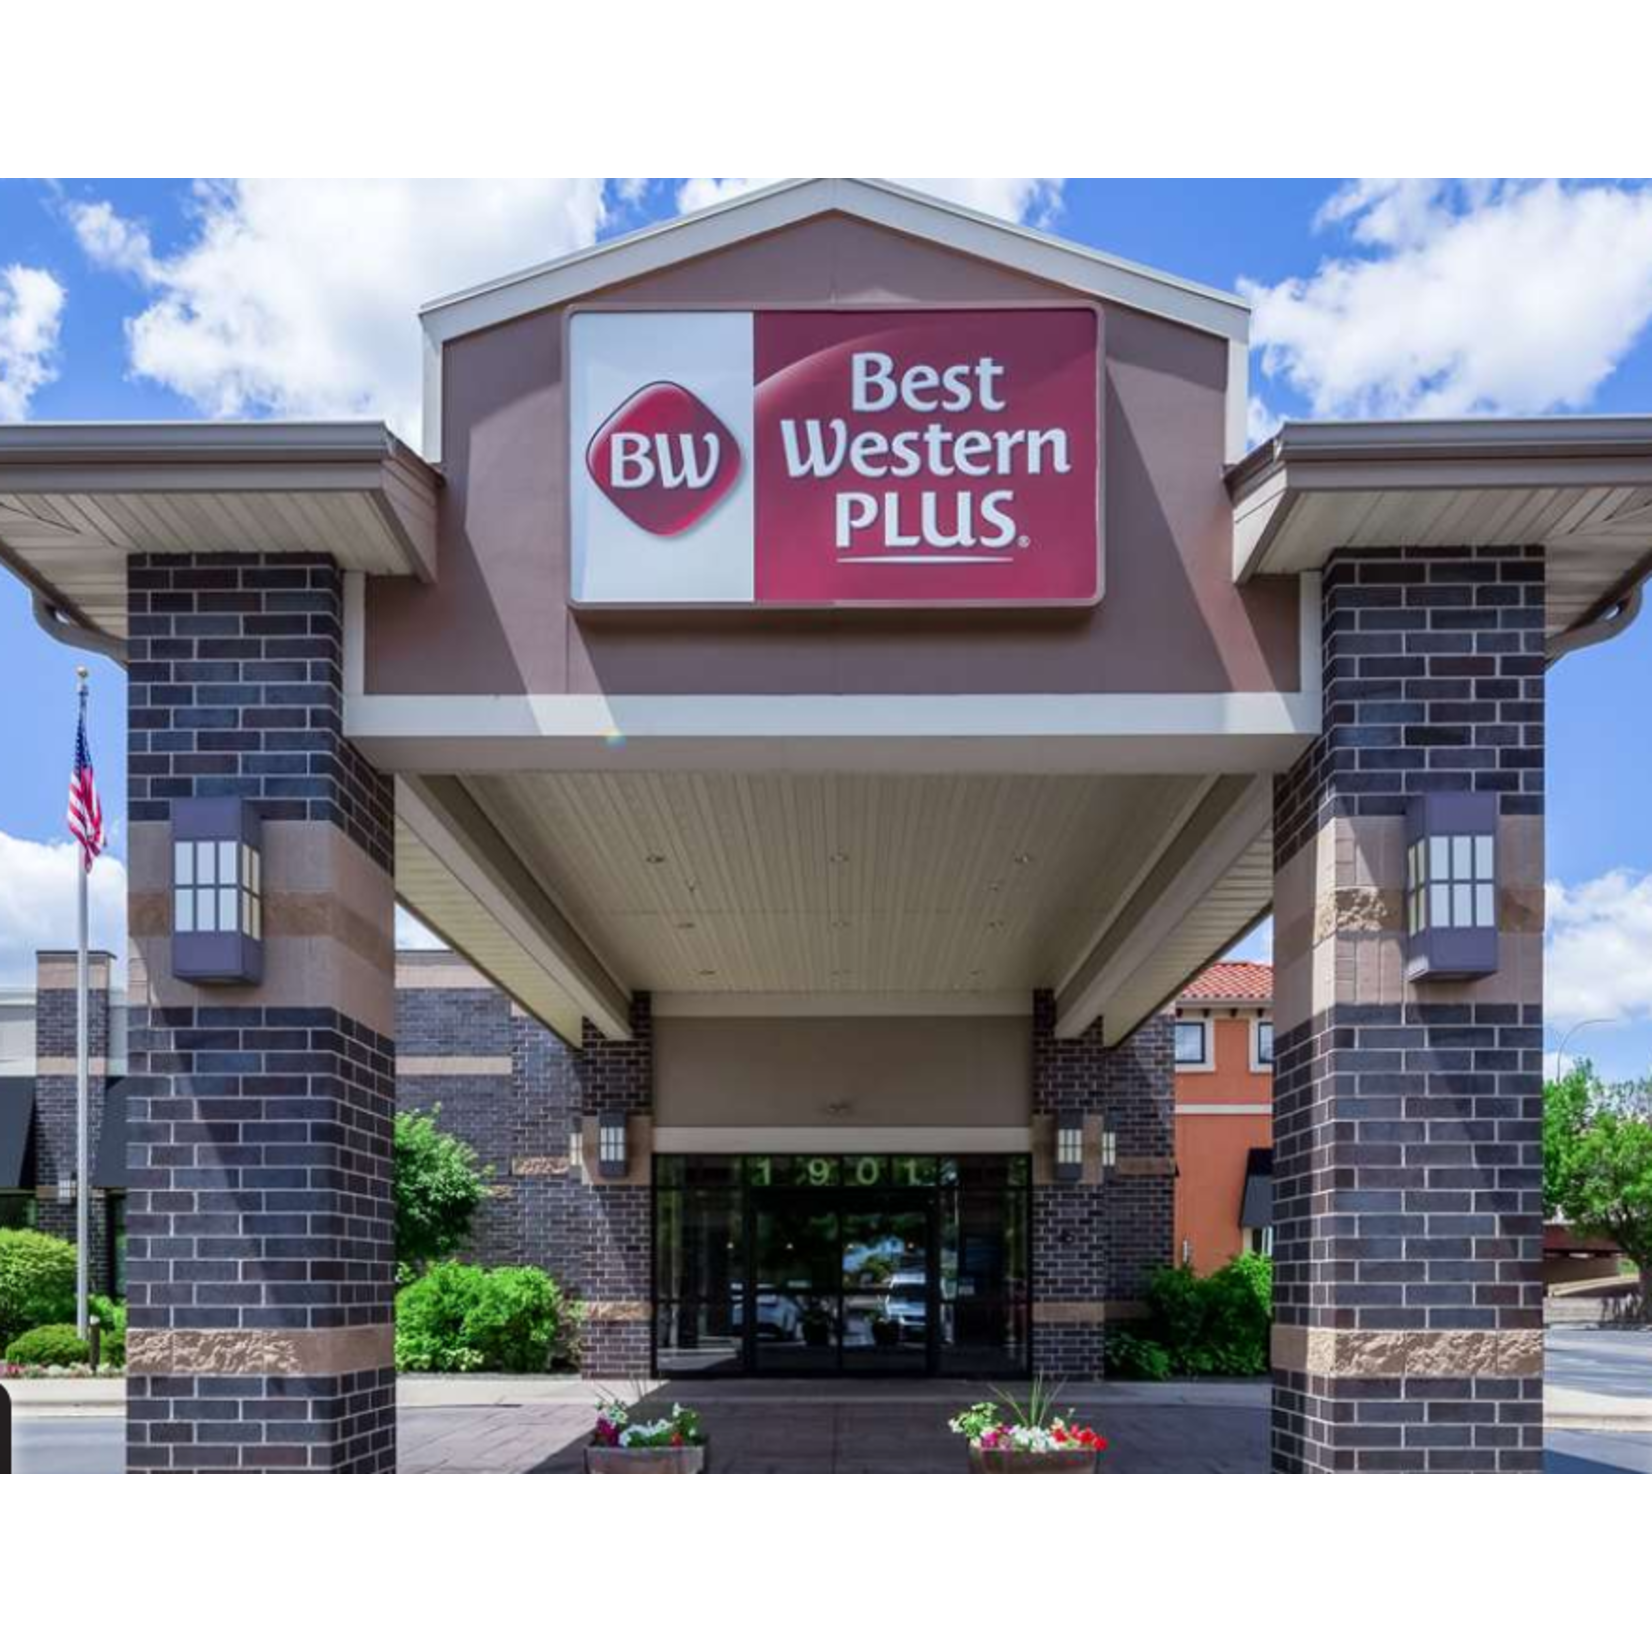 MN-Best Western Plus Hotel-Bloomington MN-Best Western Plus Hotel-Bloomington $199.00 (1) Night Stay